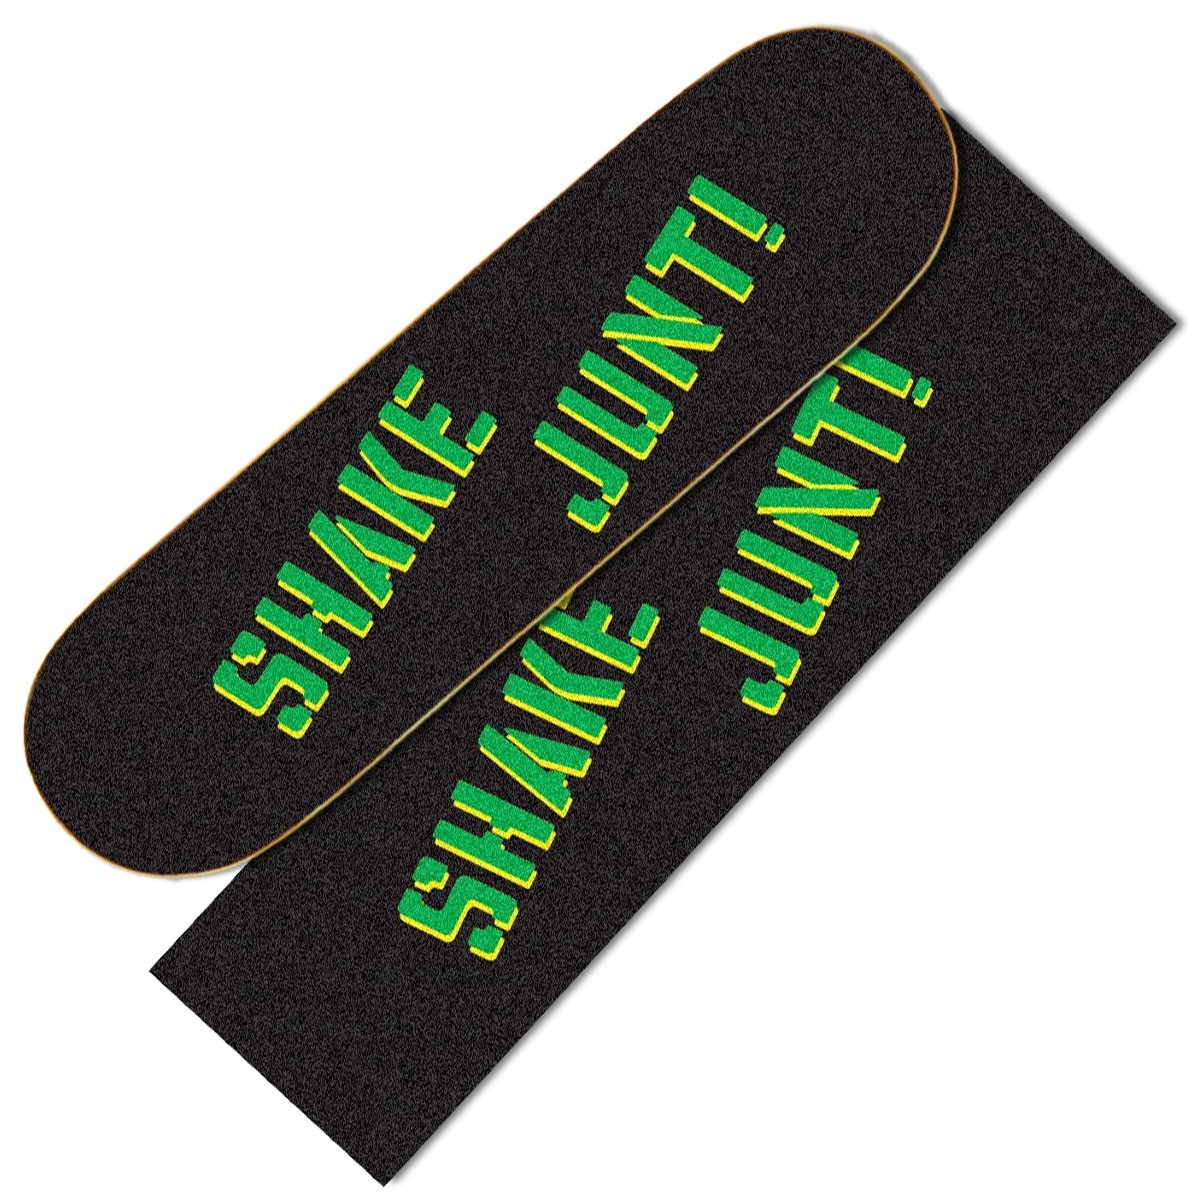 show original title Details about   Shake Junt Clear Griptape sprayed 9" x 33" Skateboard Grip Tape Shake Junt NEW 